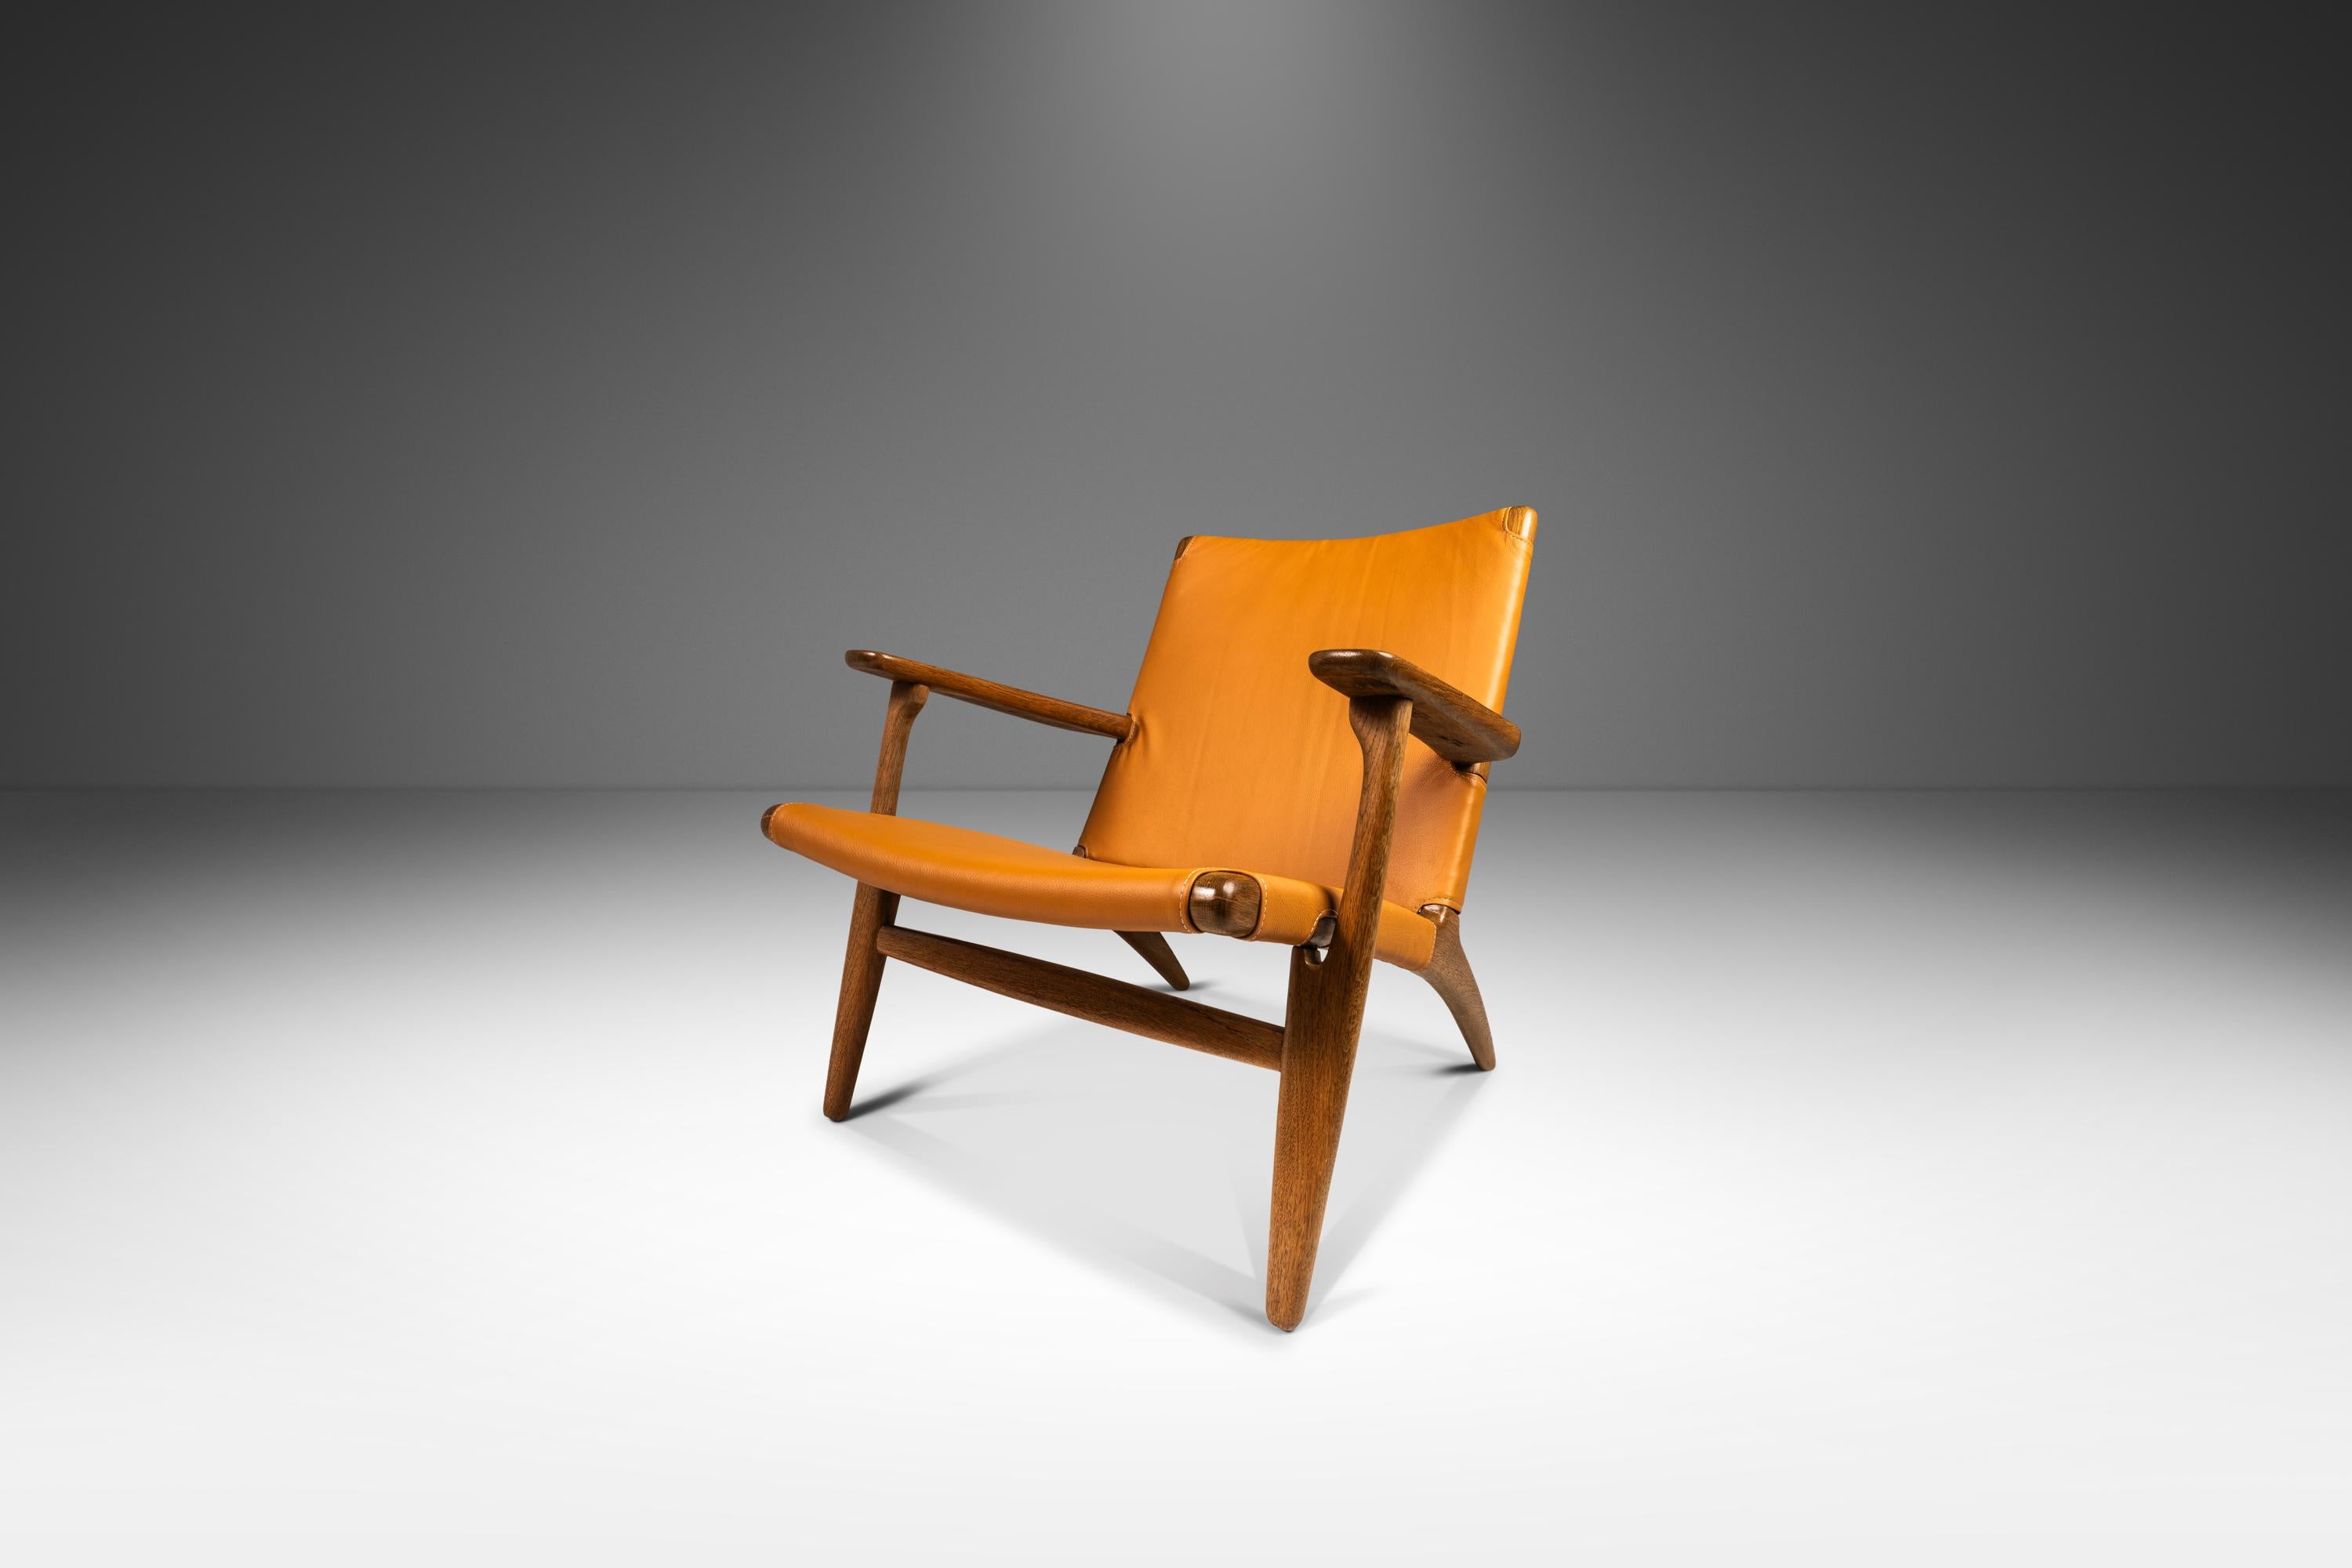  Danish Mid-Century CH 25 Lounge Chair by Hans J. Wegner, Oak & Leather, c. 1950 For Sale 1